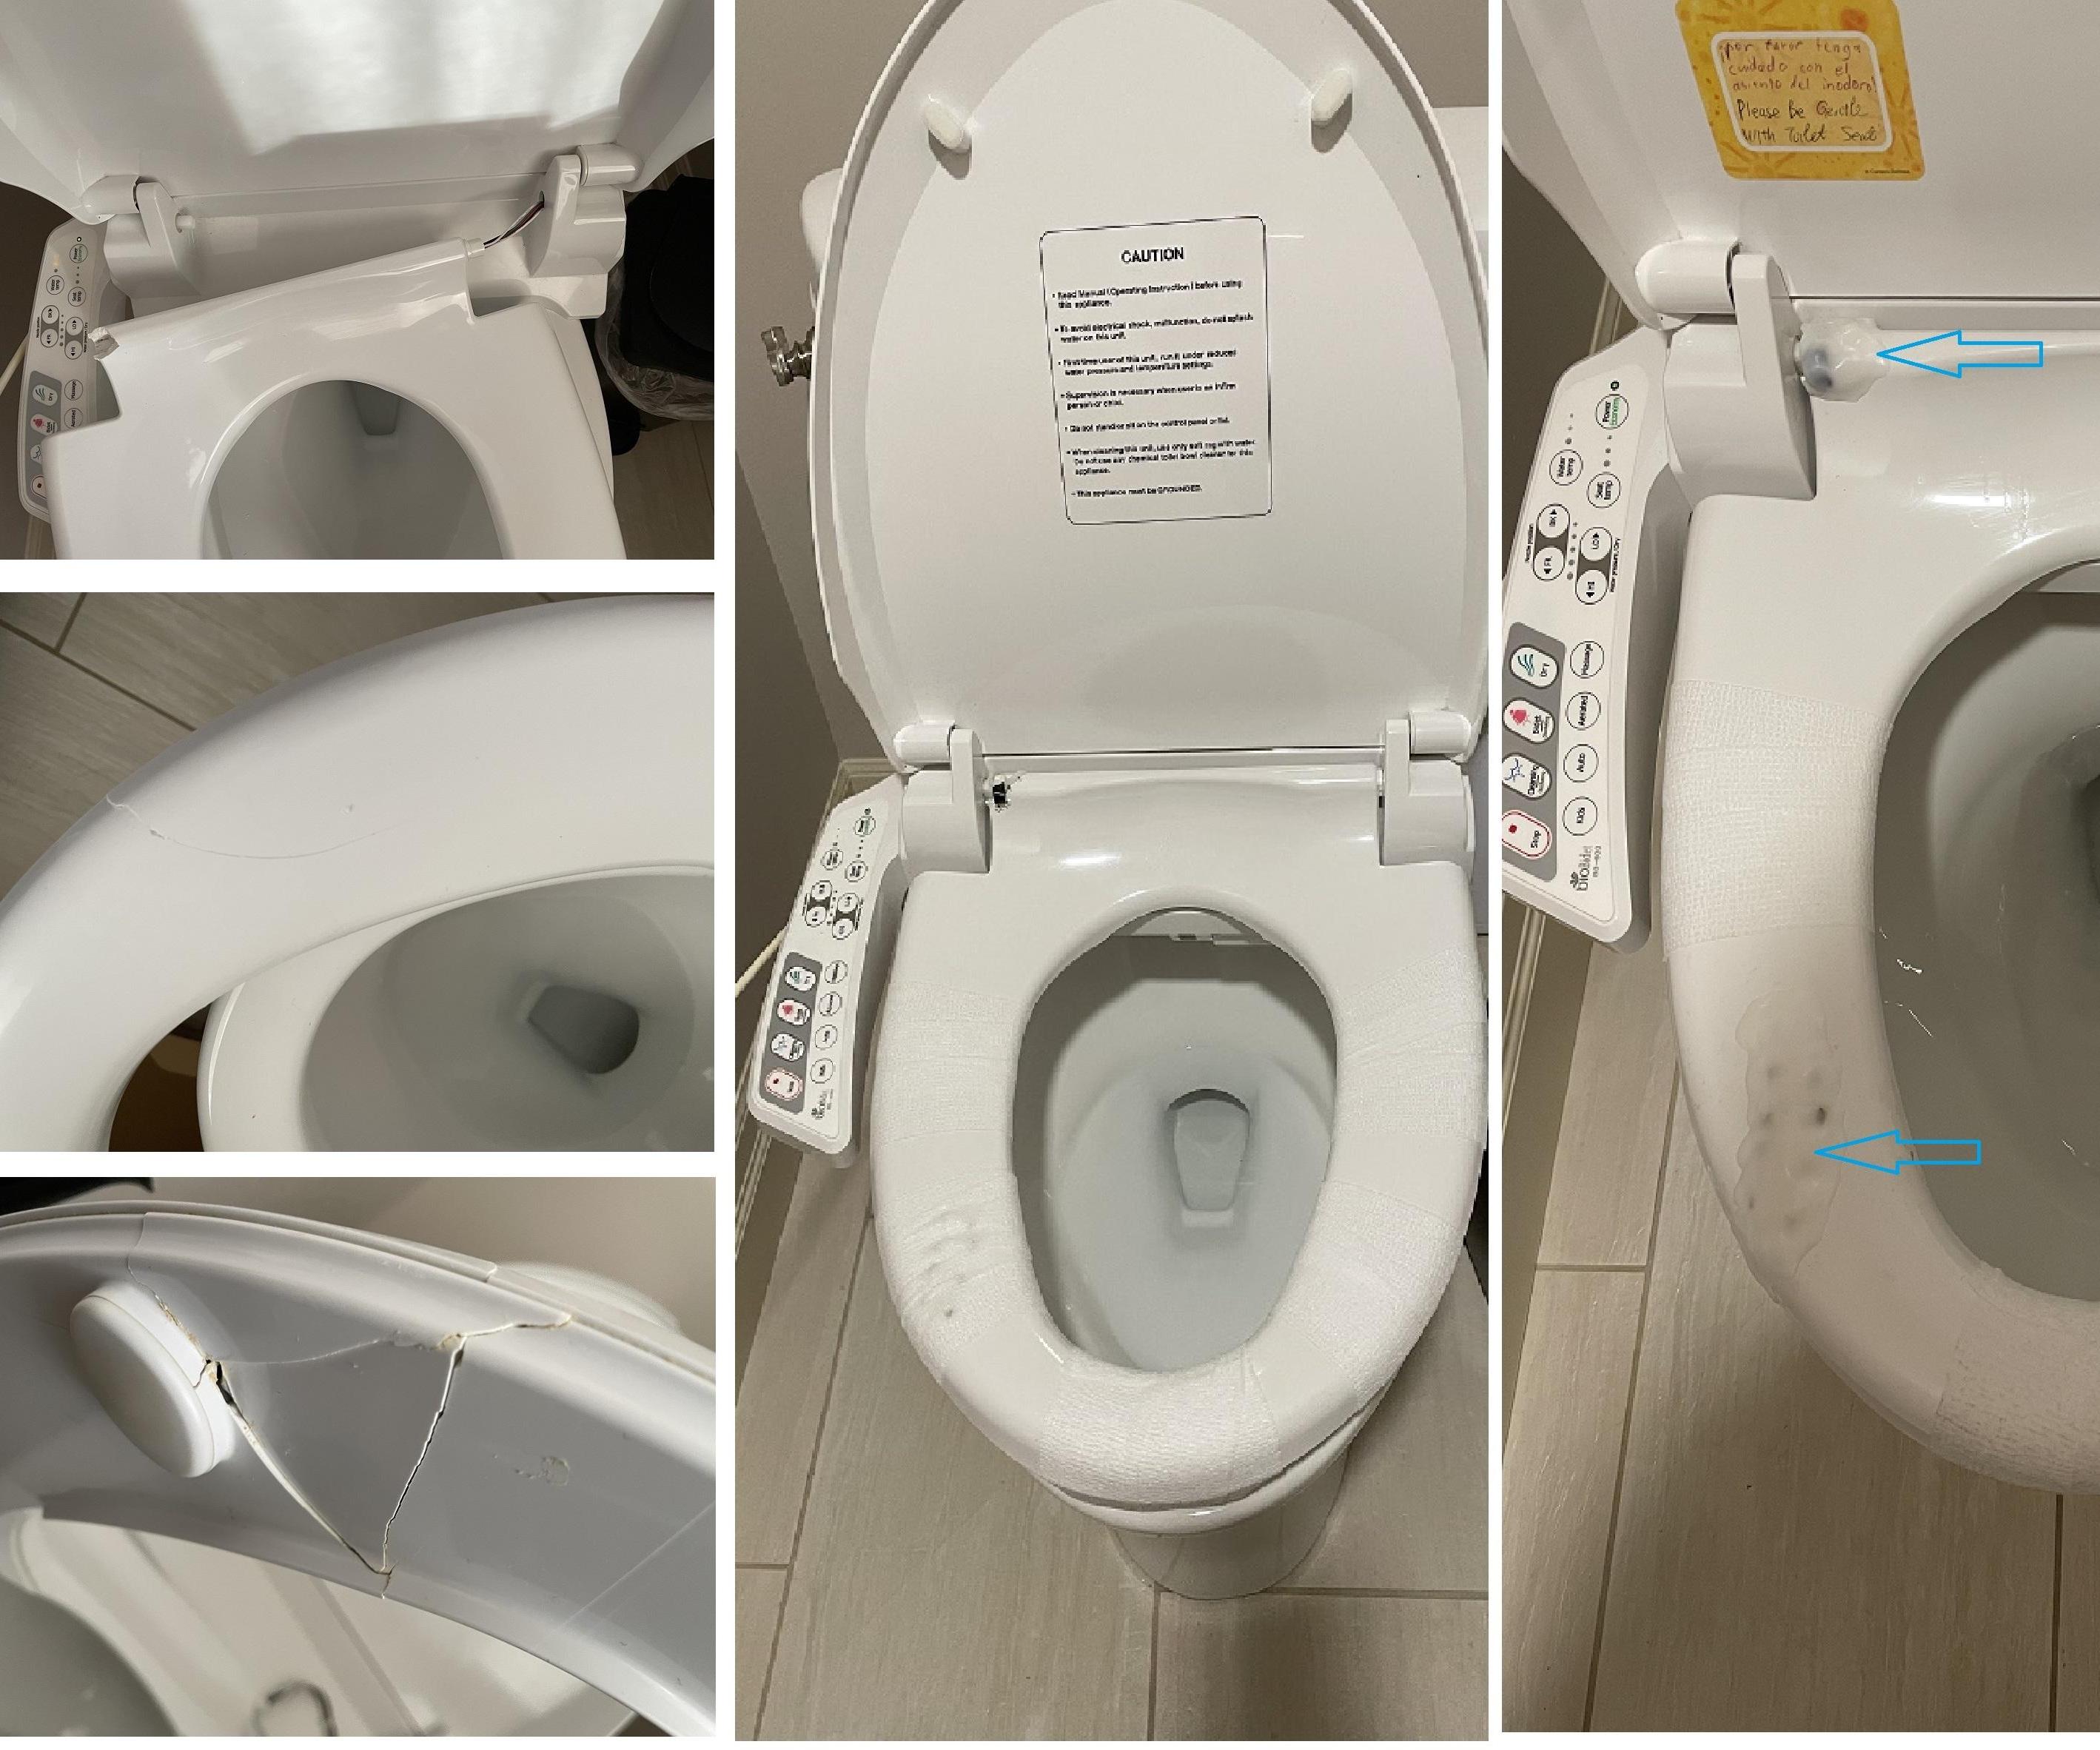 Fix a Broken Bidet Toilet Seat With Potential Design Flaw